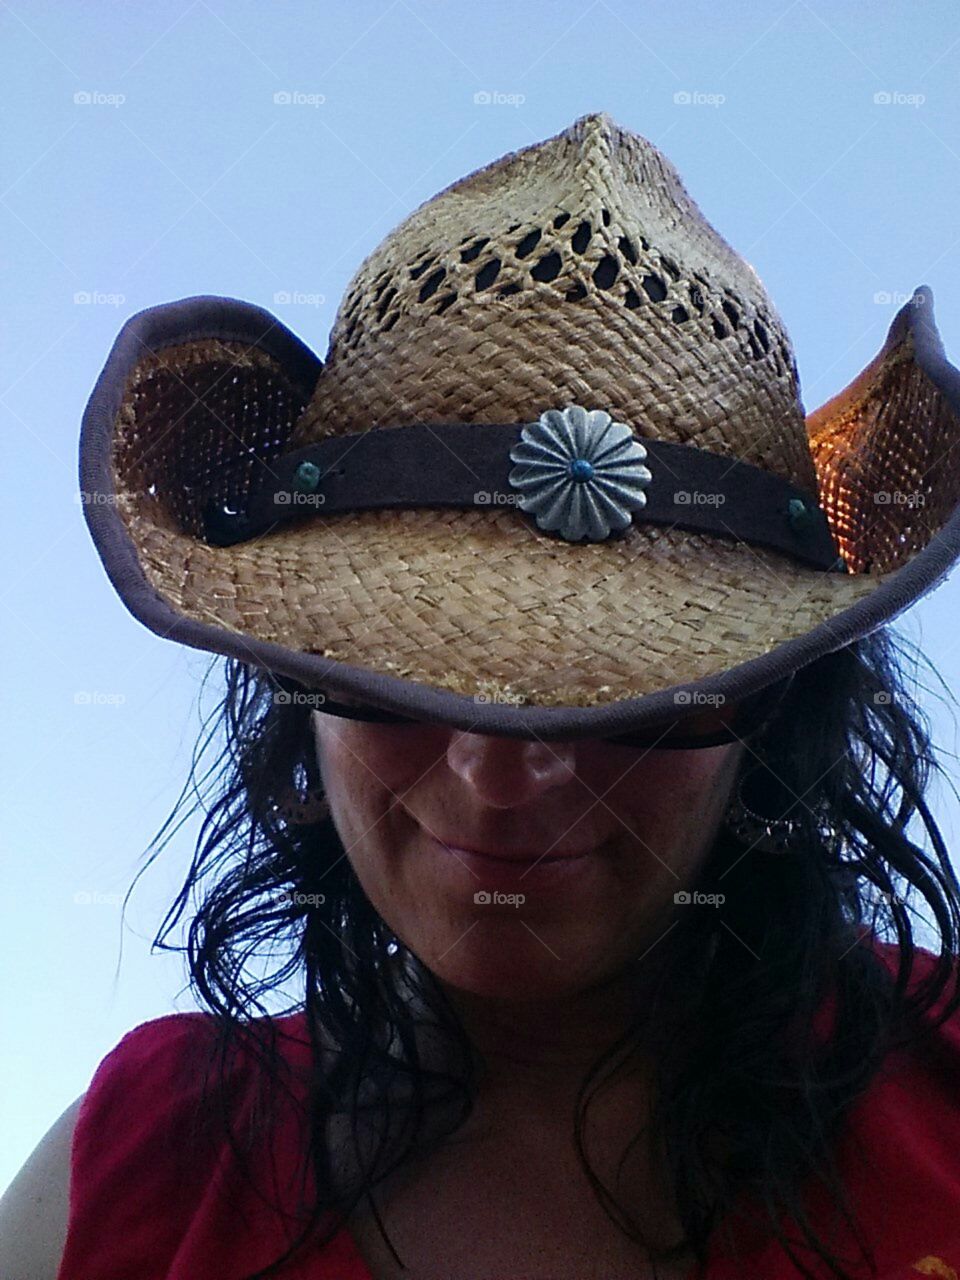 Cowboy hat. Selfie wearing my "party" cowboy hat at a concert